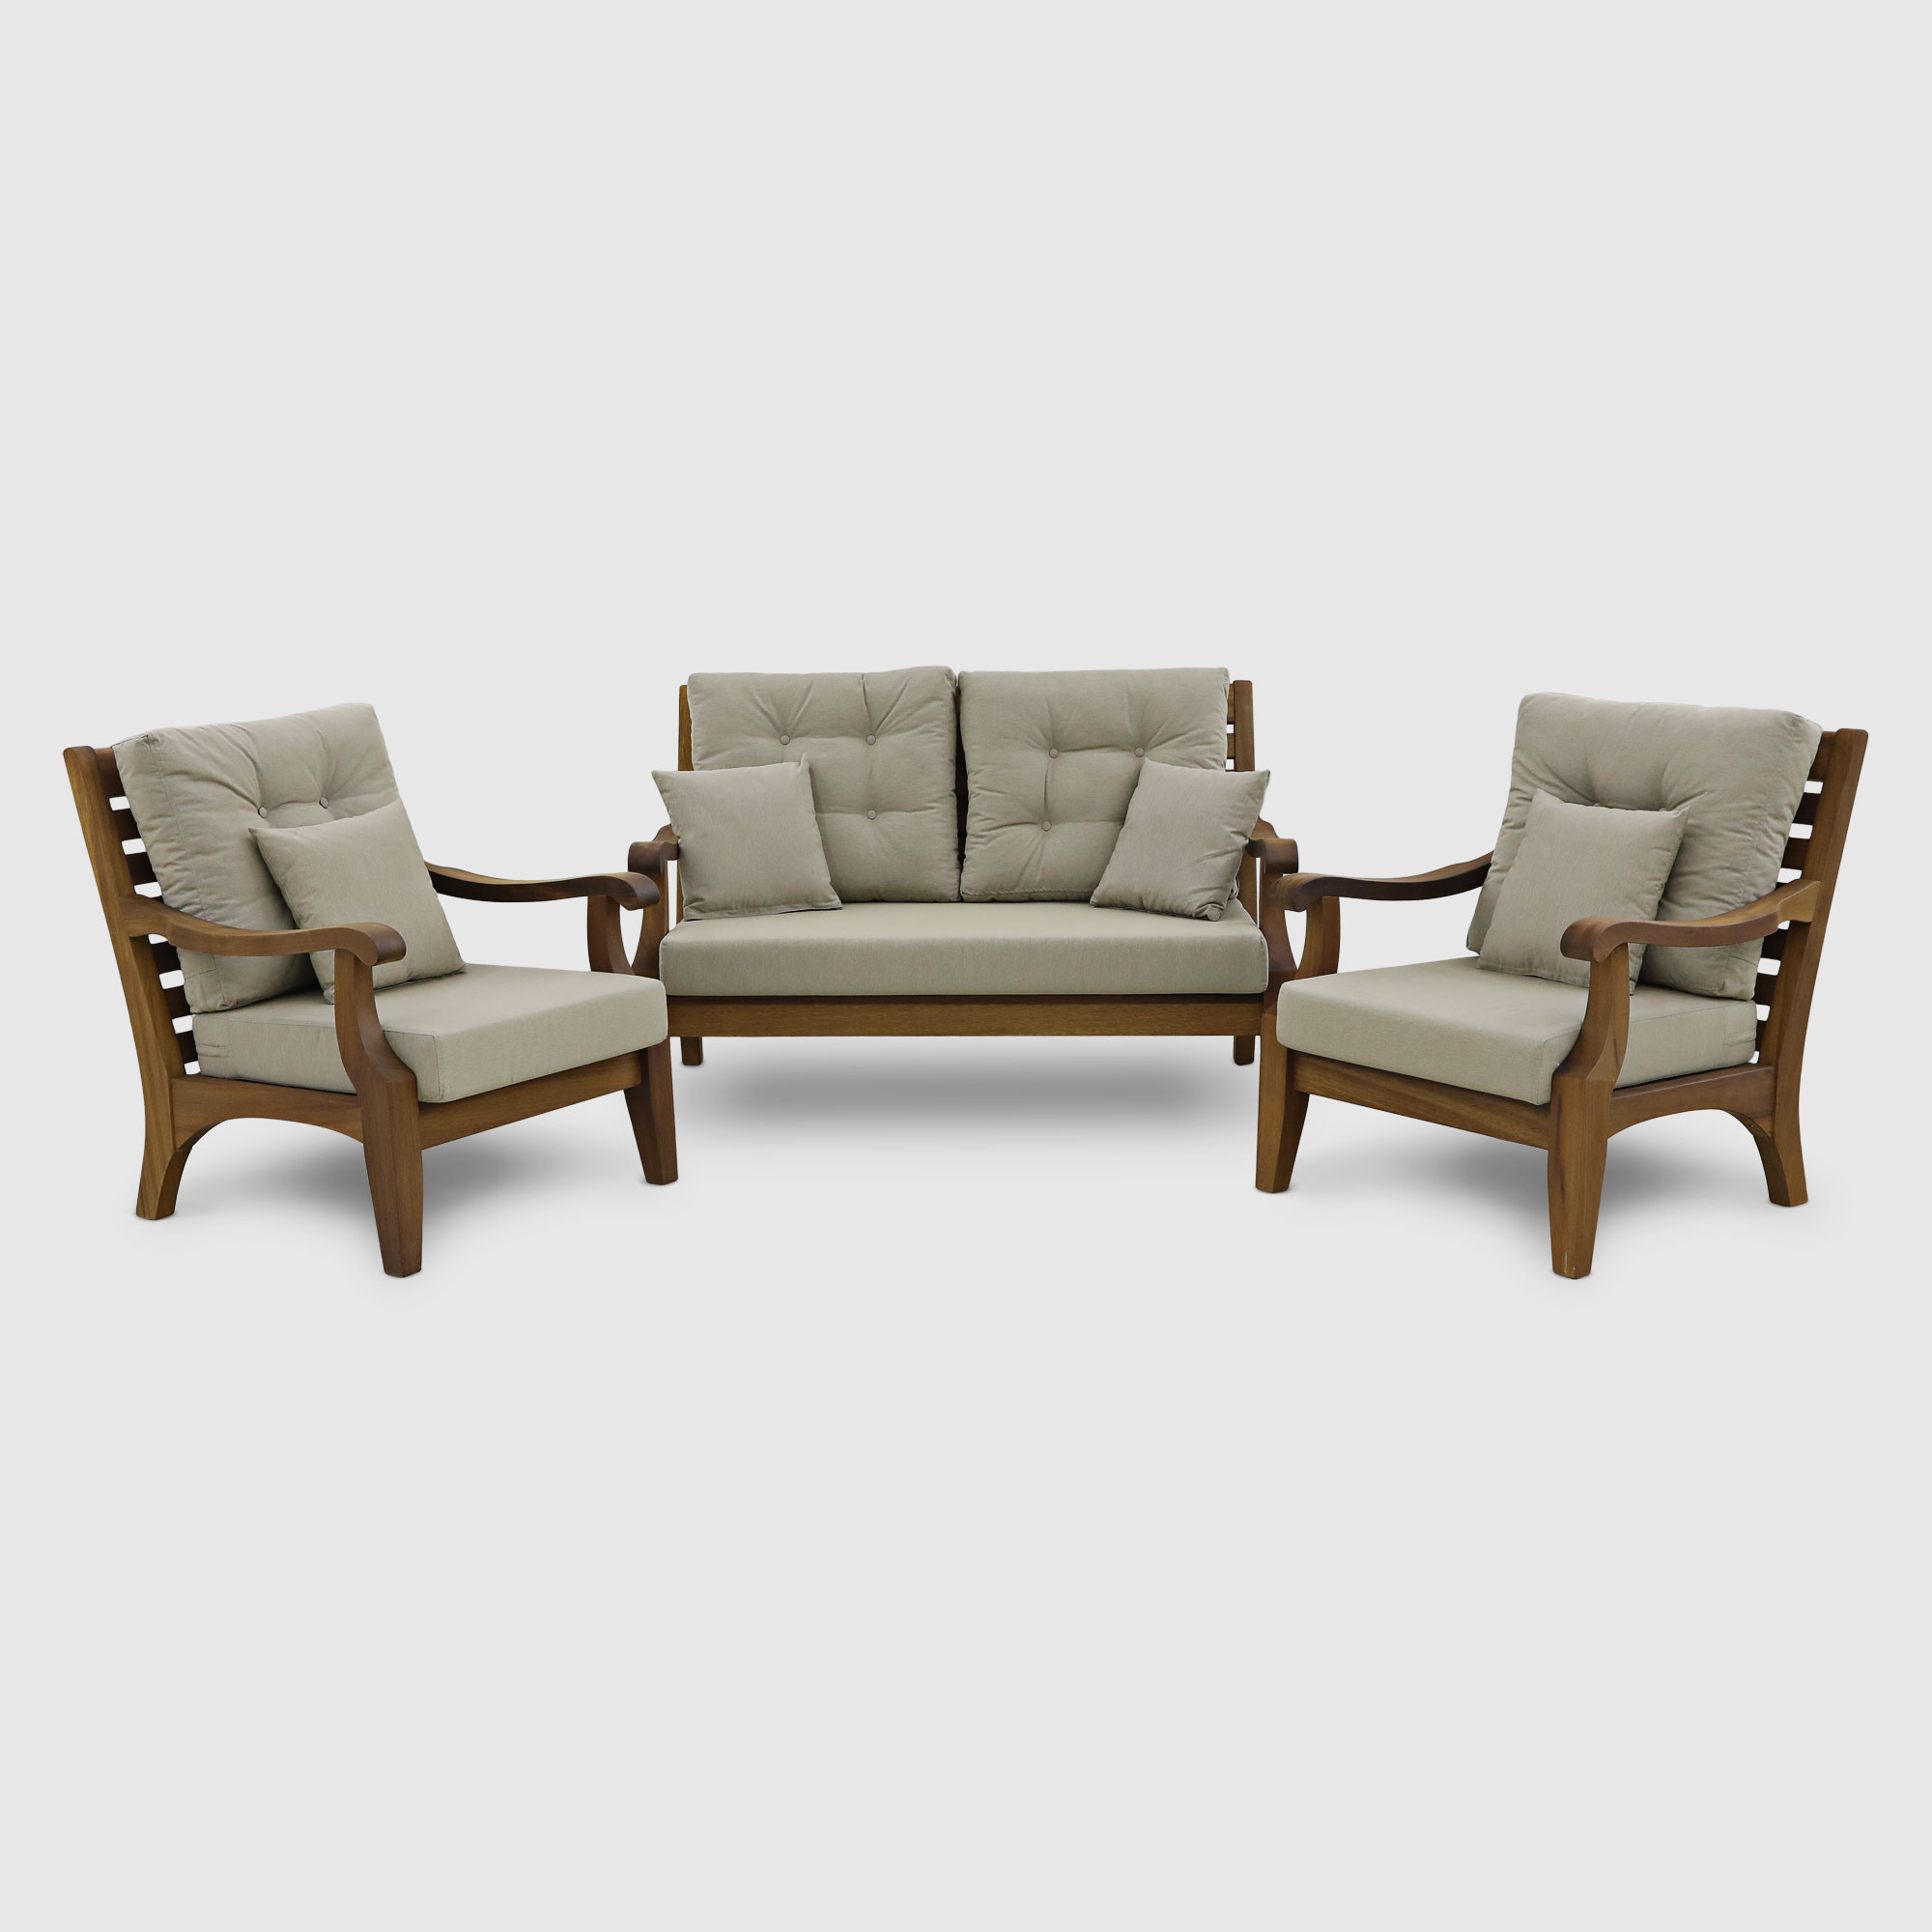 Комплект мебели Root art Nevada 3 предмета, цвет коричневый